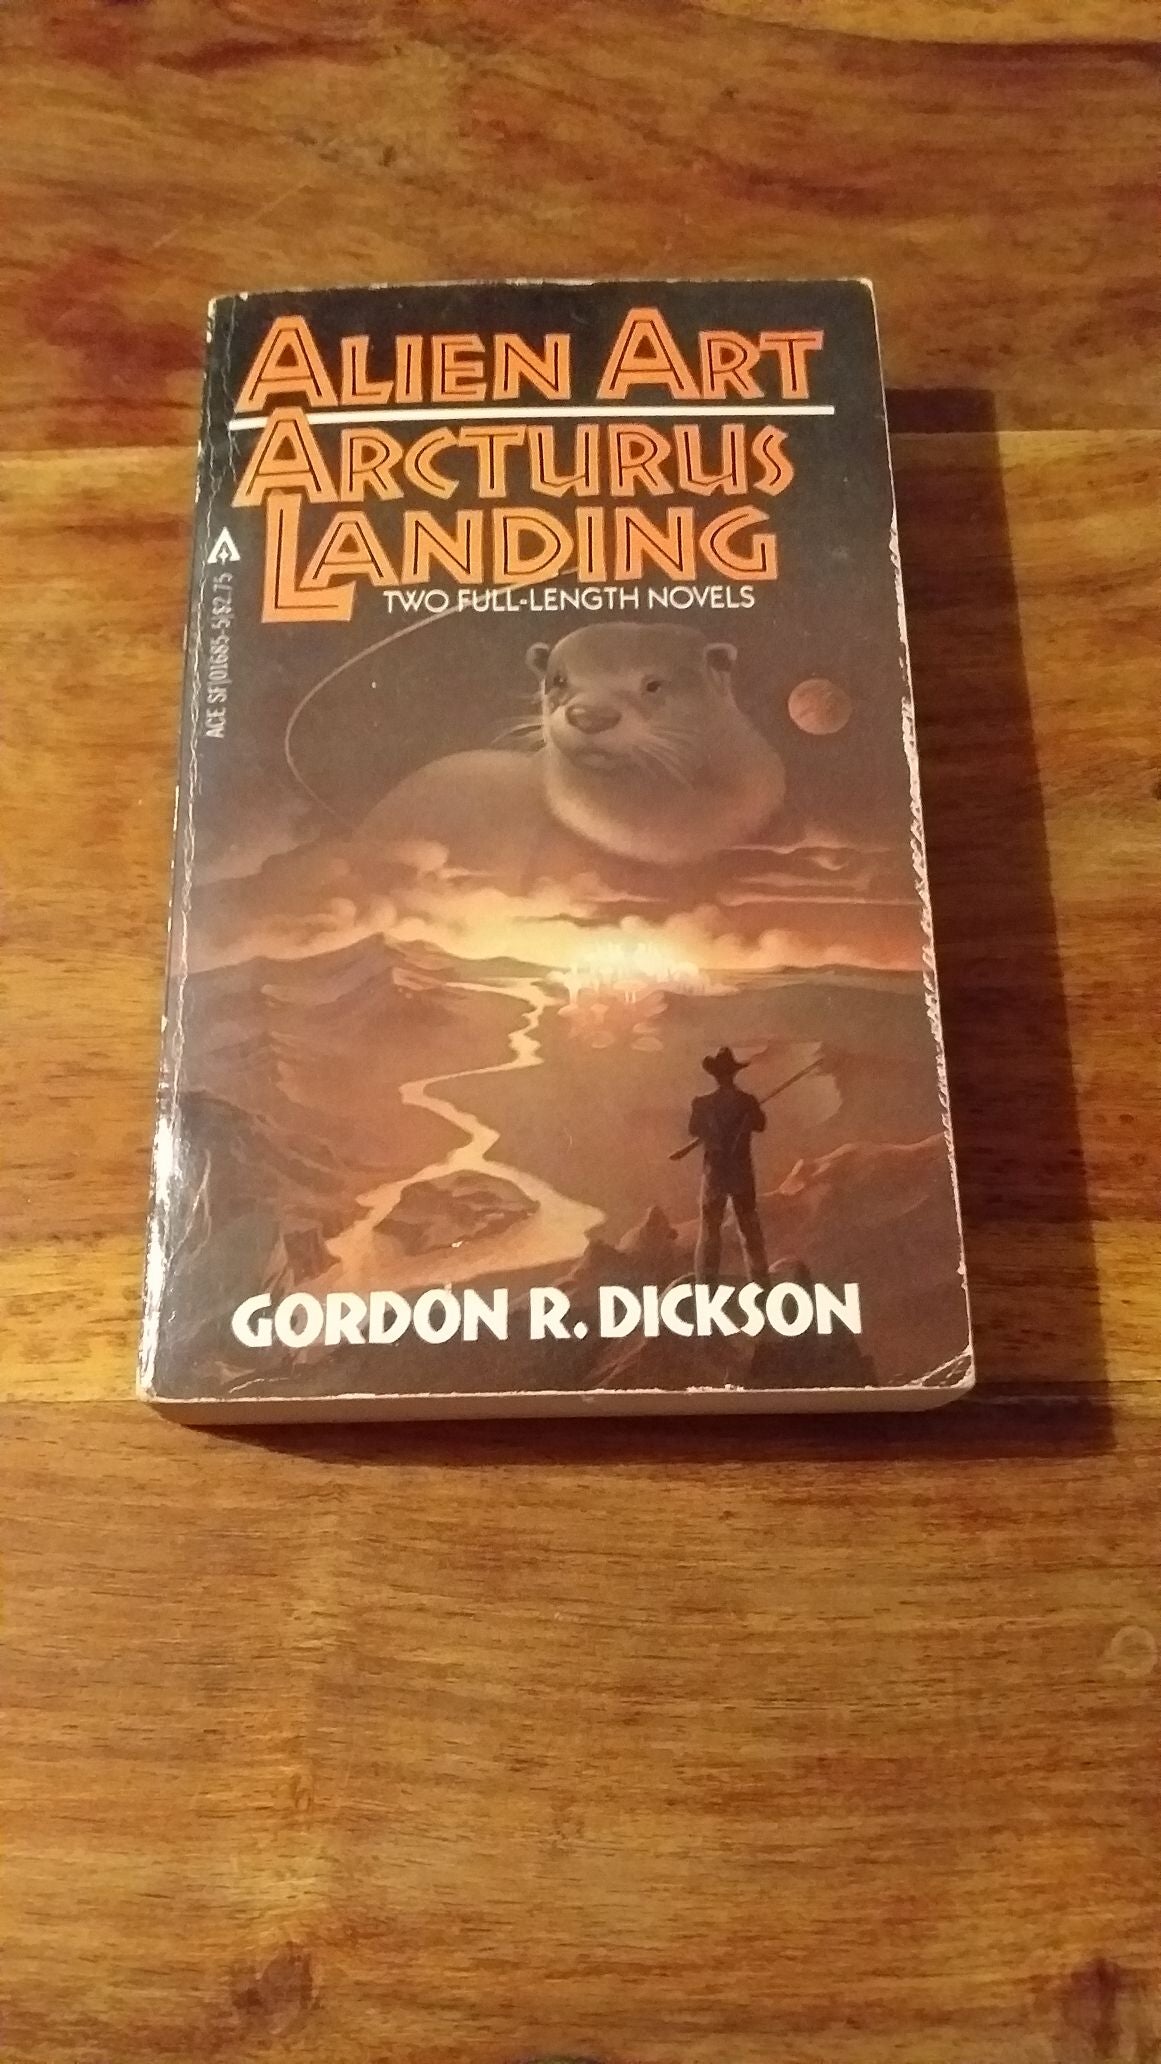 Alien Art/Arcturus Landing by Gordon R Dickson 1981